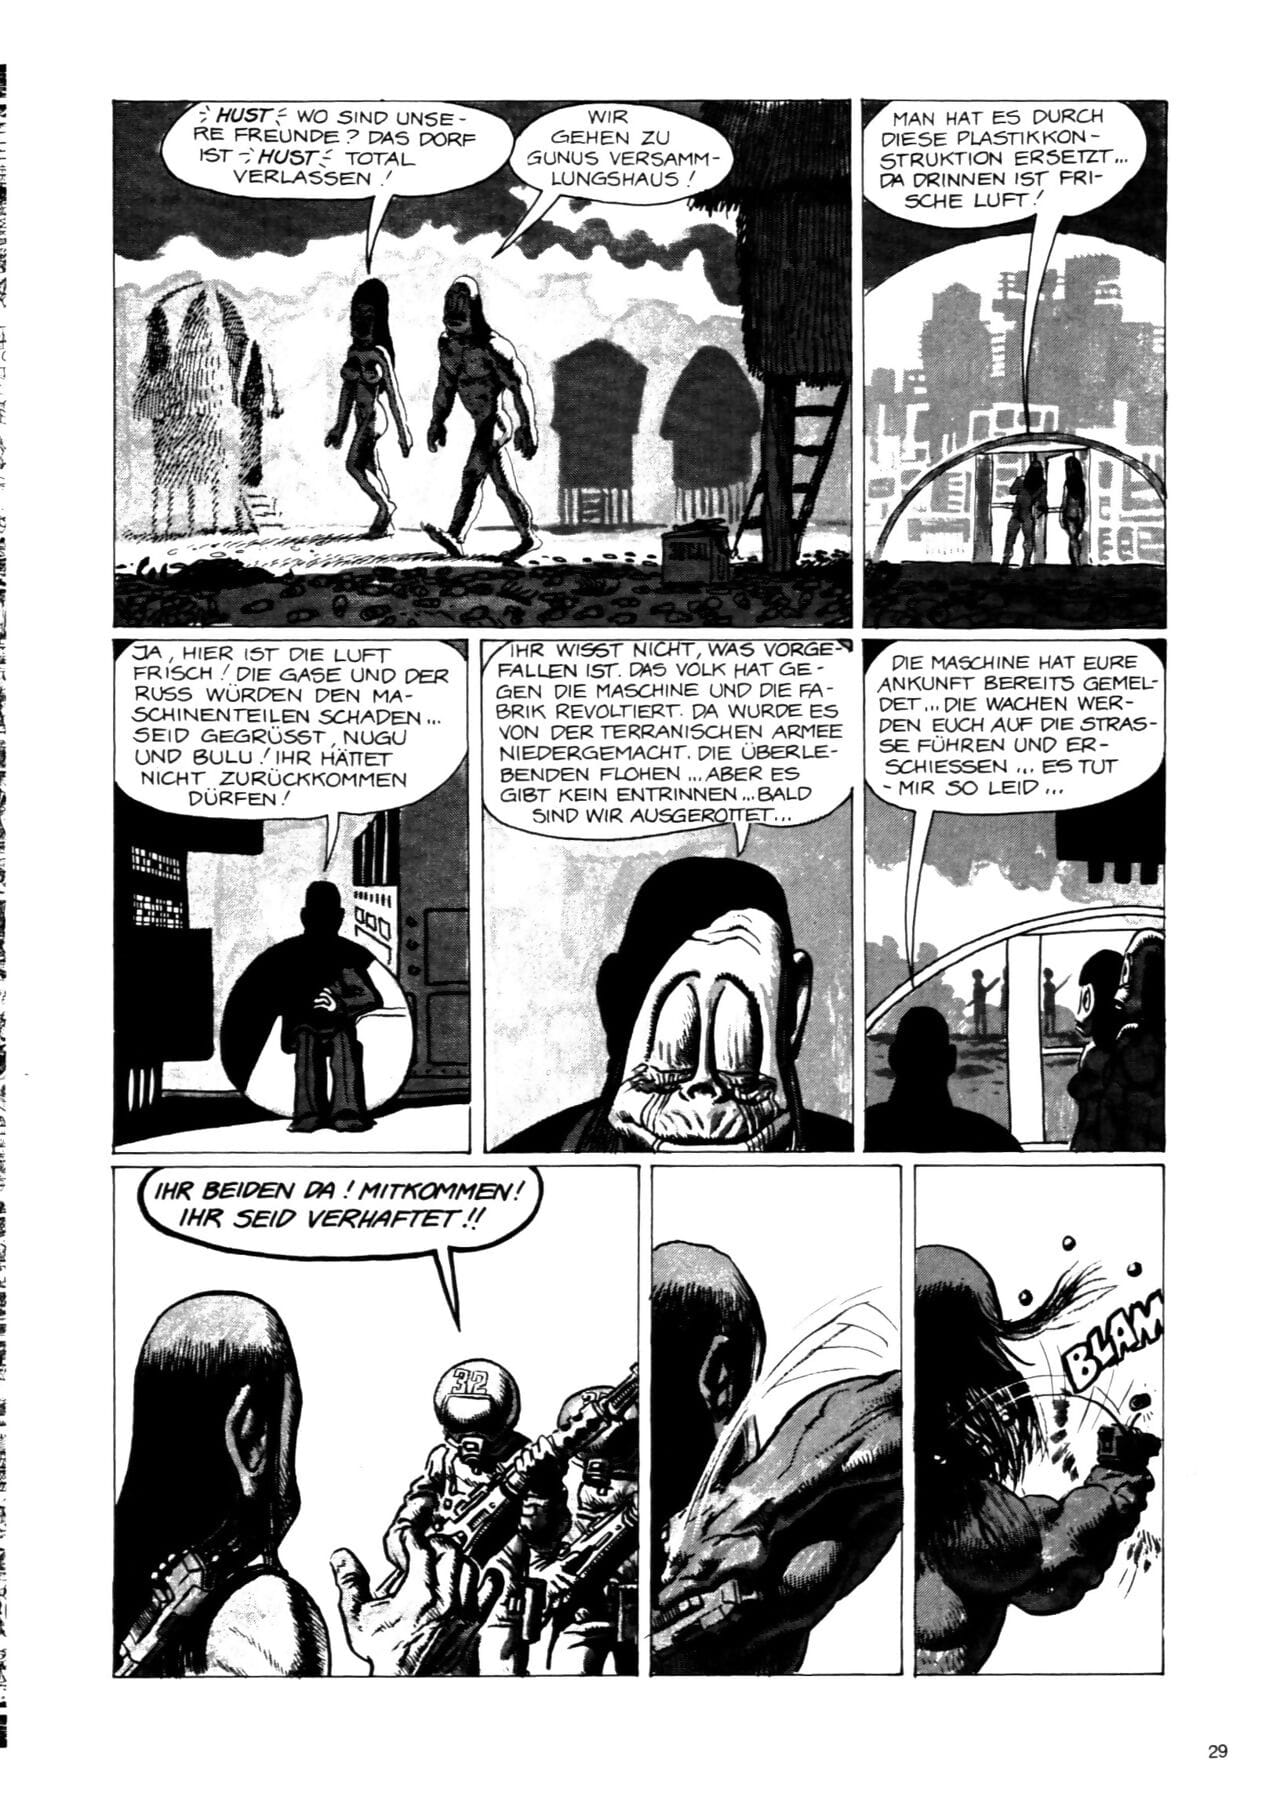 schwermetall #054 PART 2 page 1